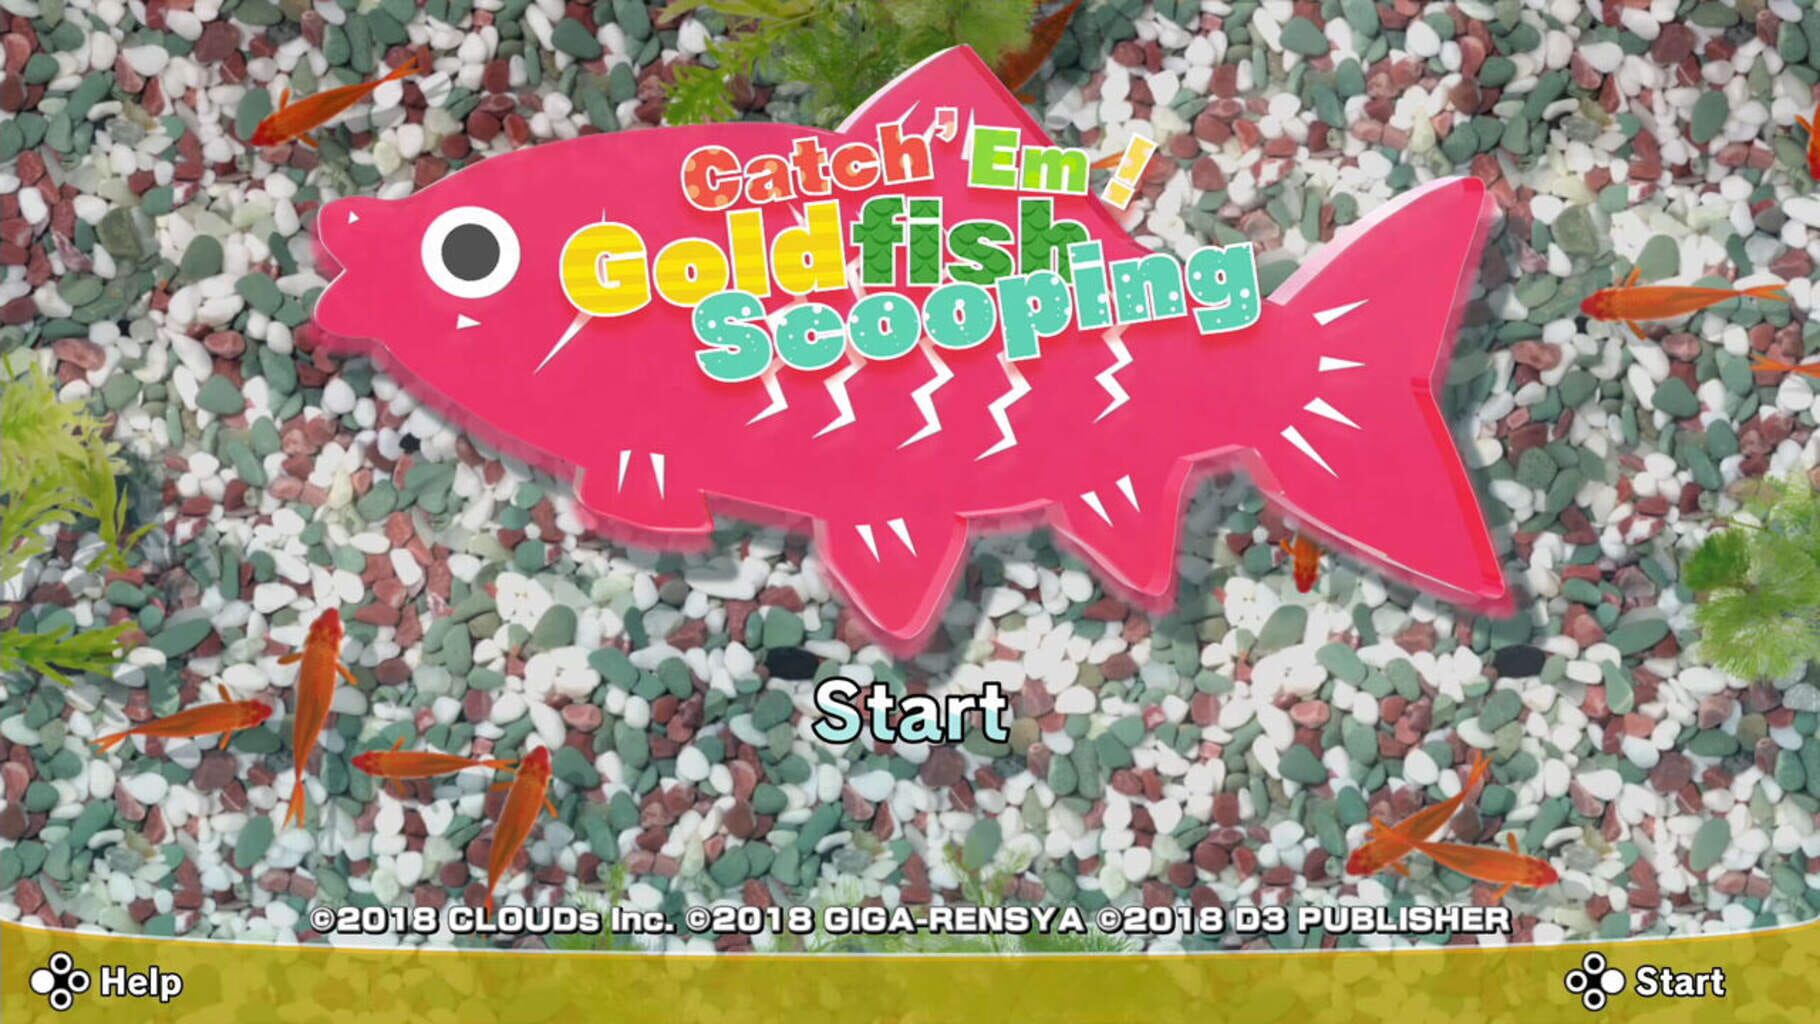 Catch 'Em! Goldfish Scooping screenshot